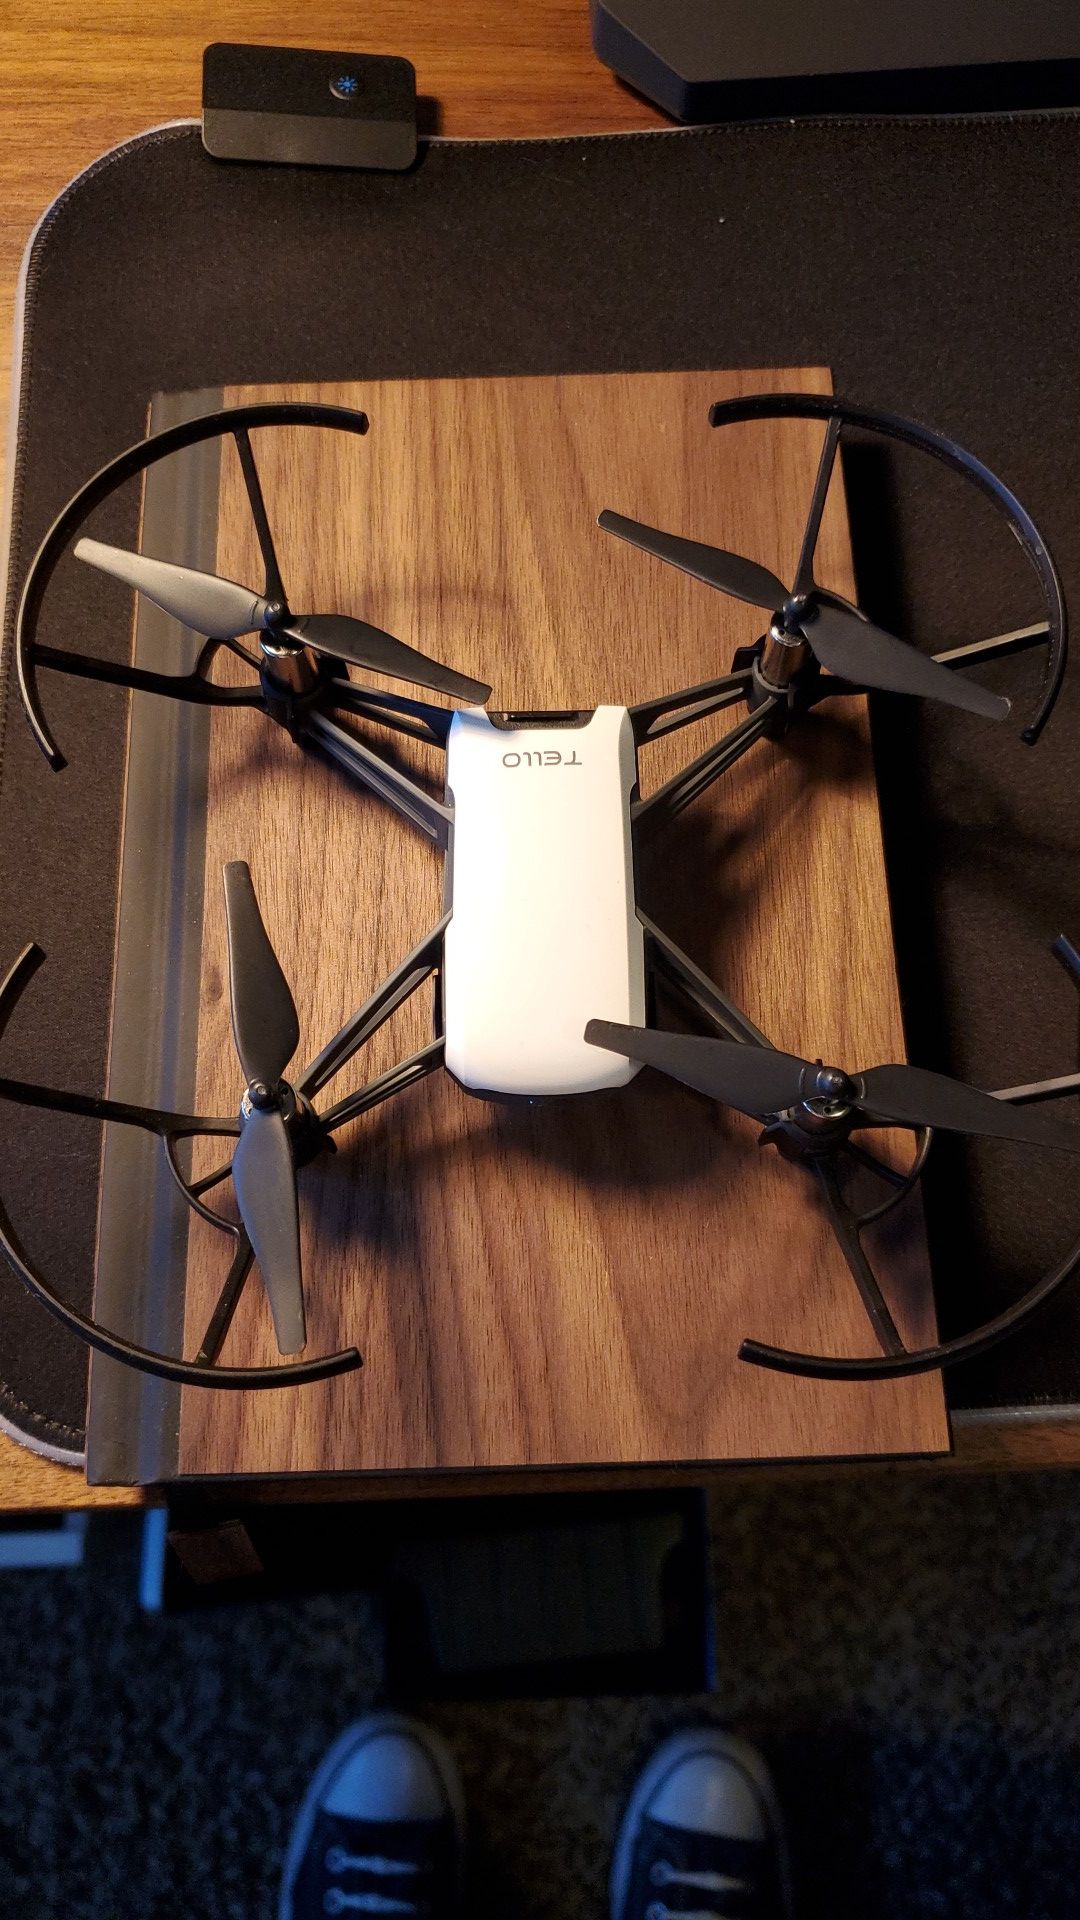 DJI Tello drone